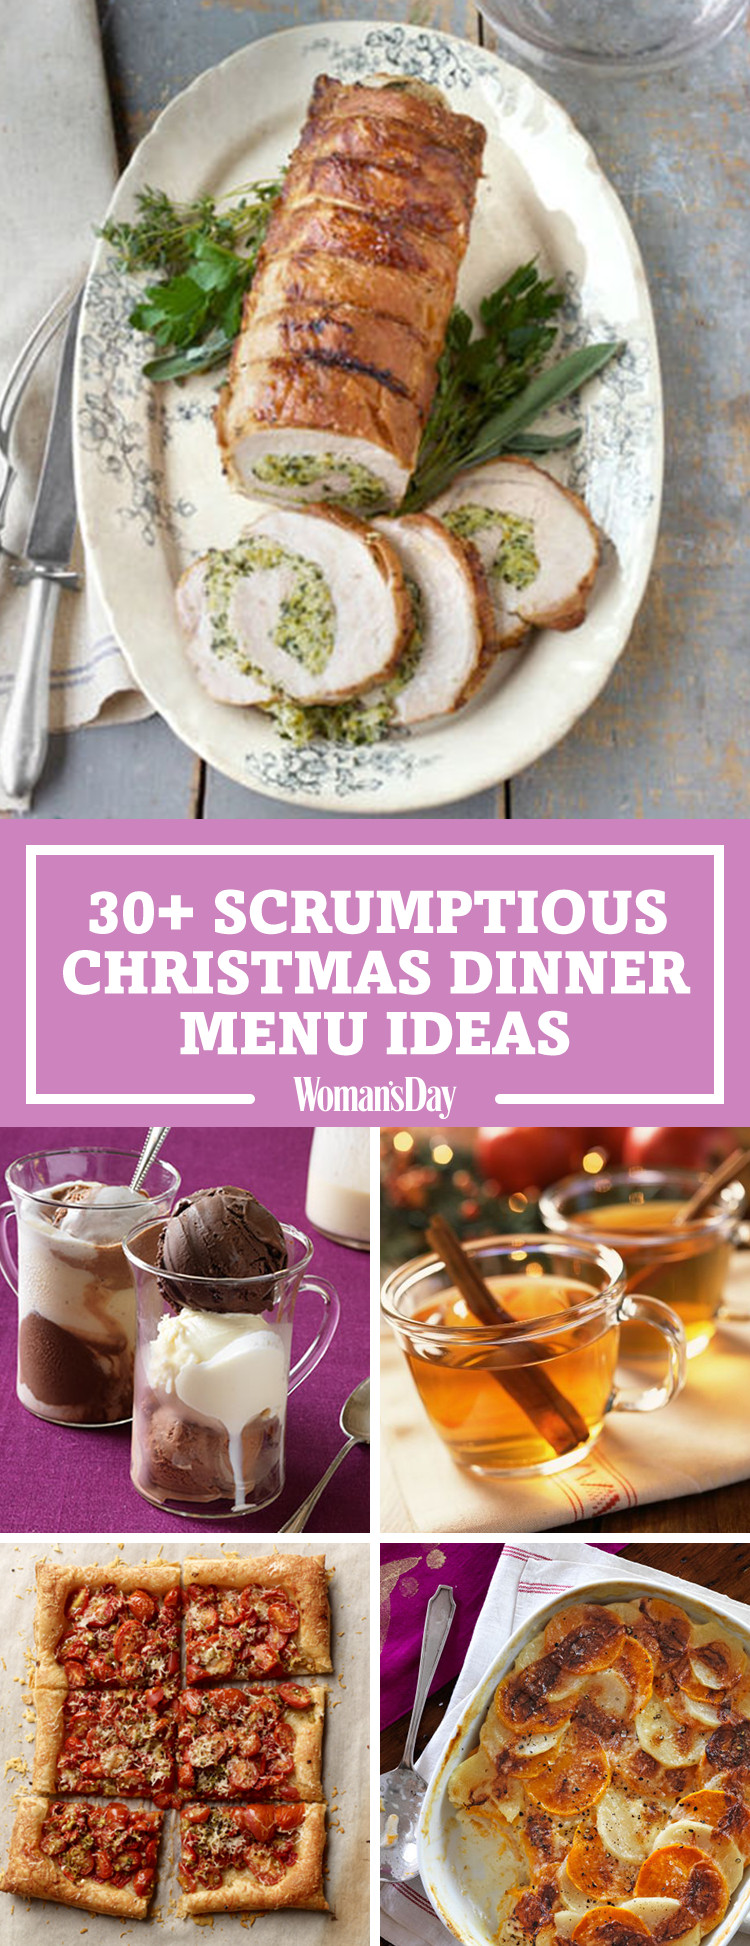 Recipes For Christmas Dinners
 Best Christmas Dinner Menu Ideas for 2017